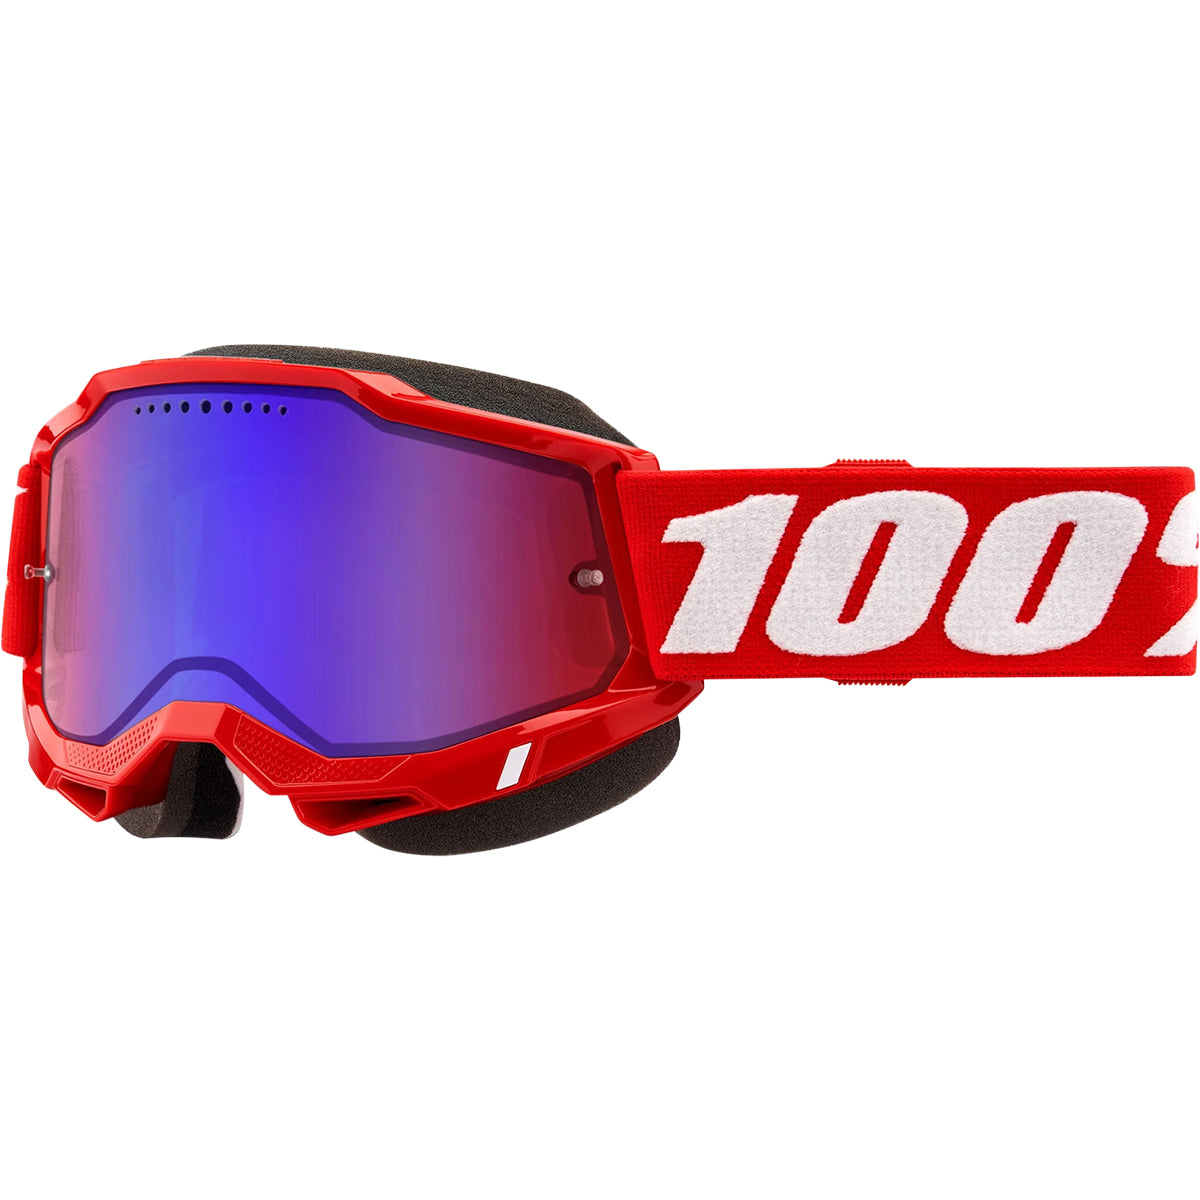 100% Accuri 2 Adult Snow Goggles-2601-2839